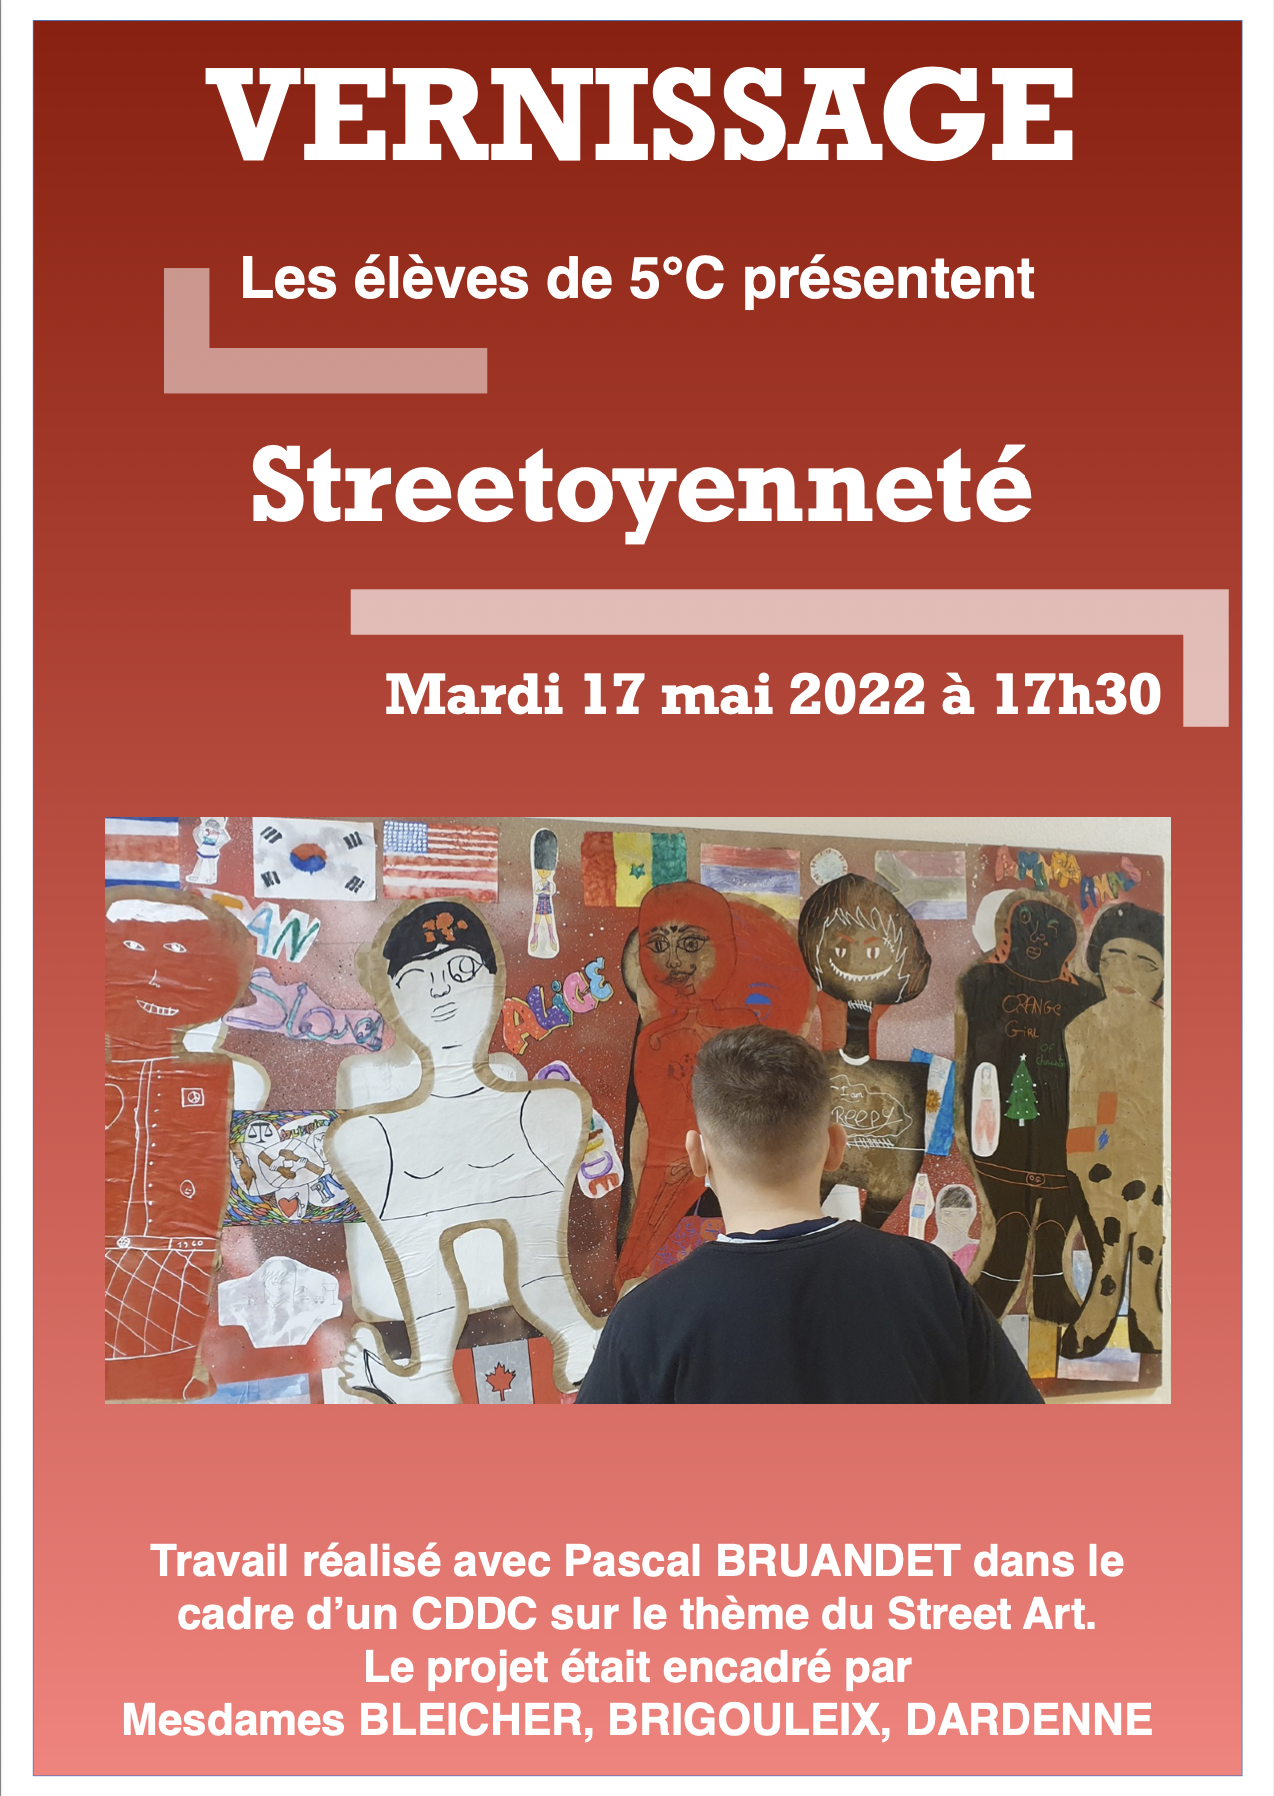 Vernissage_Streetoyennete.png, mai 2022